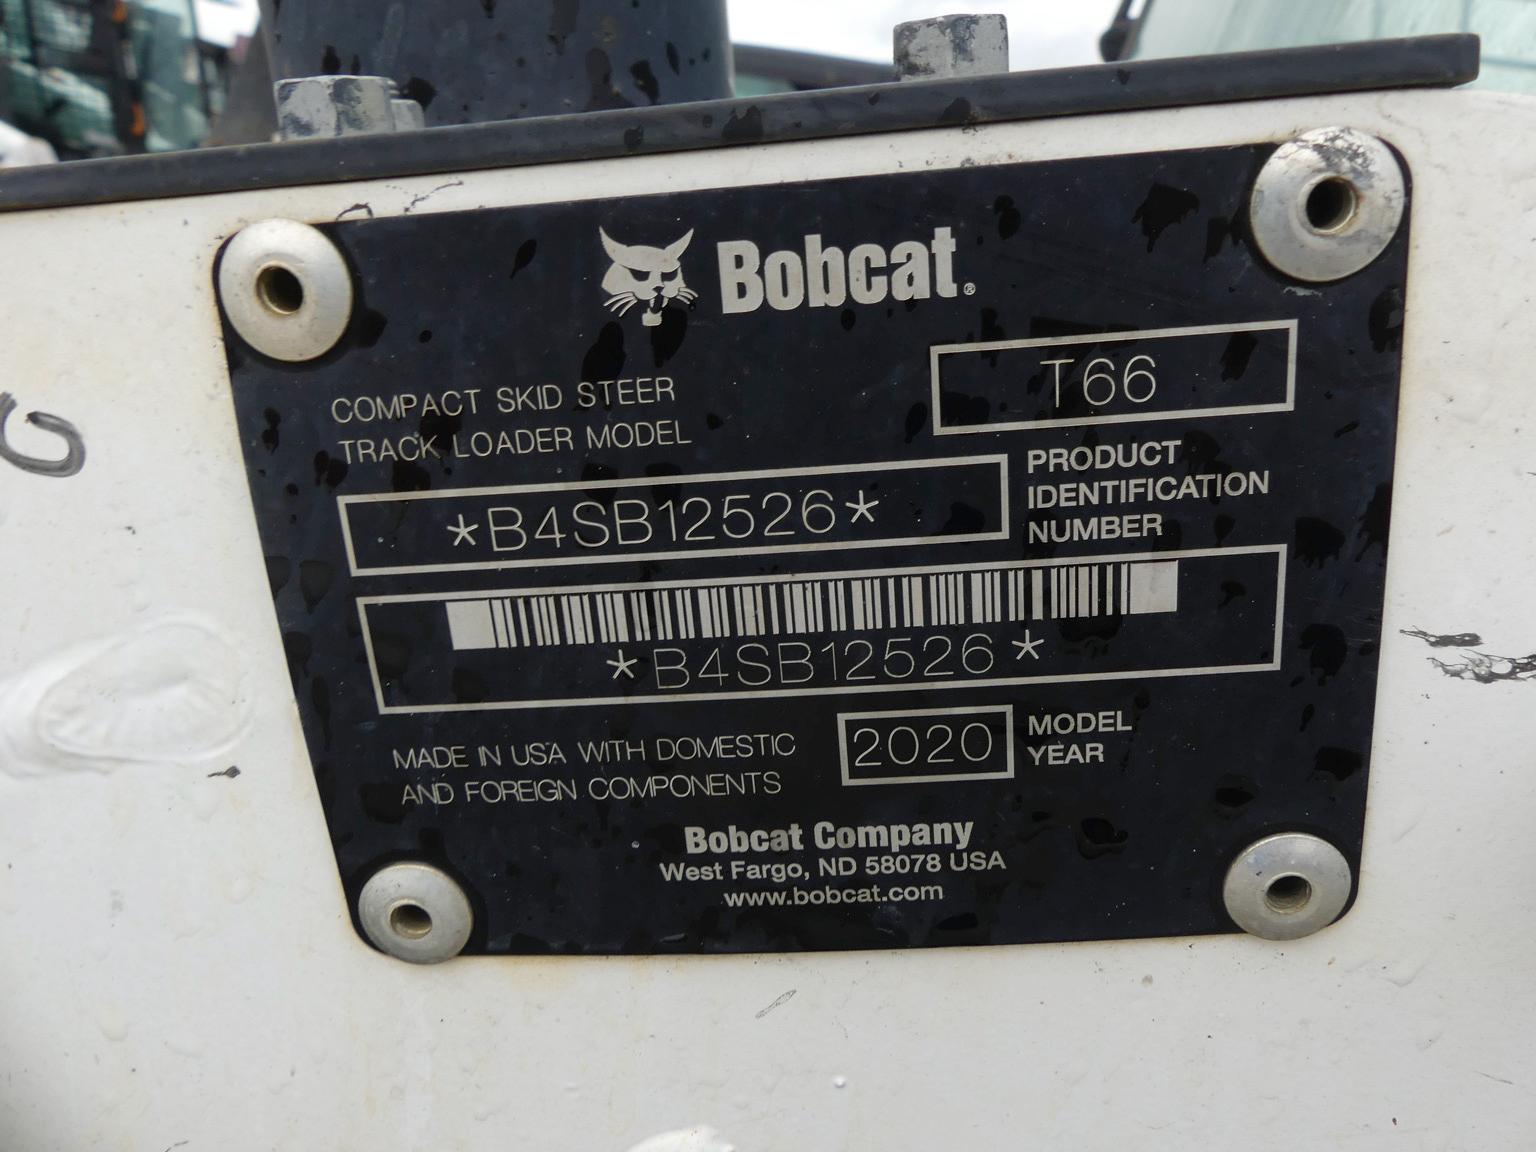 2020 Bobcat T66 Skid Steer, s/n B4SB12526: Rubber Tracks, 68in. Bkt., Meter